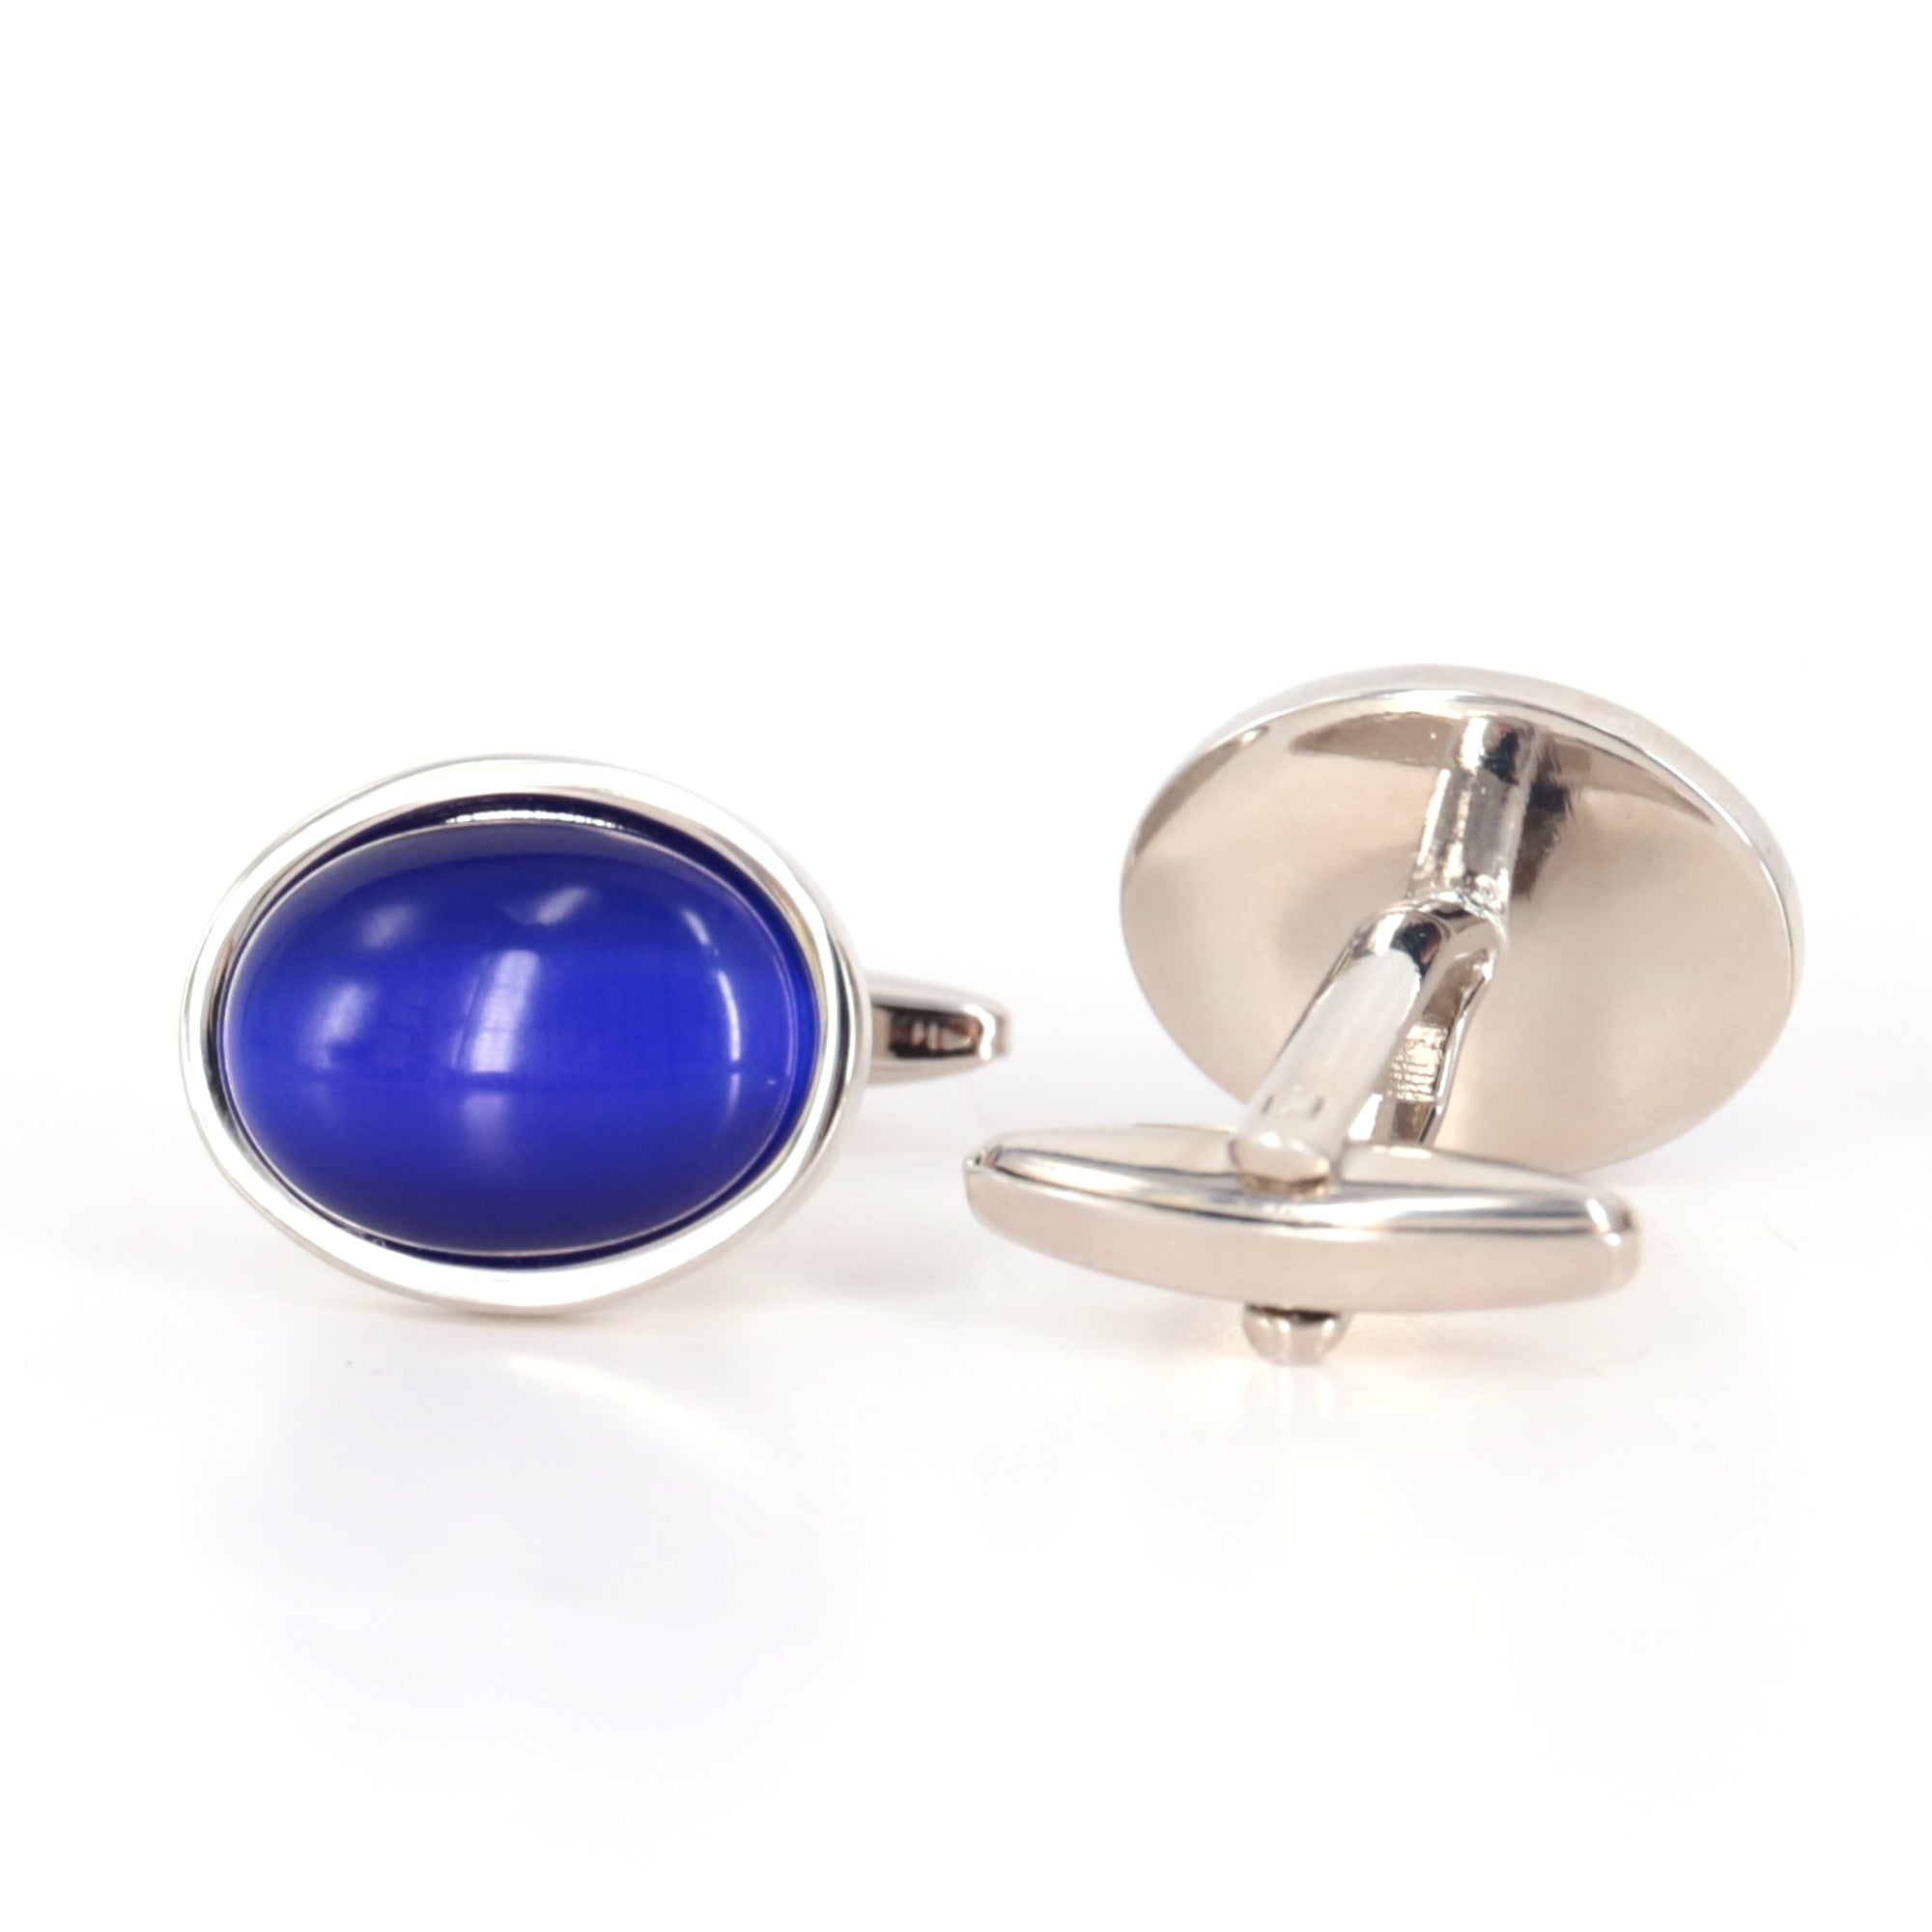 Oval Persian Blue Fibre Optic Glass Cufflinks